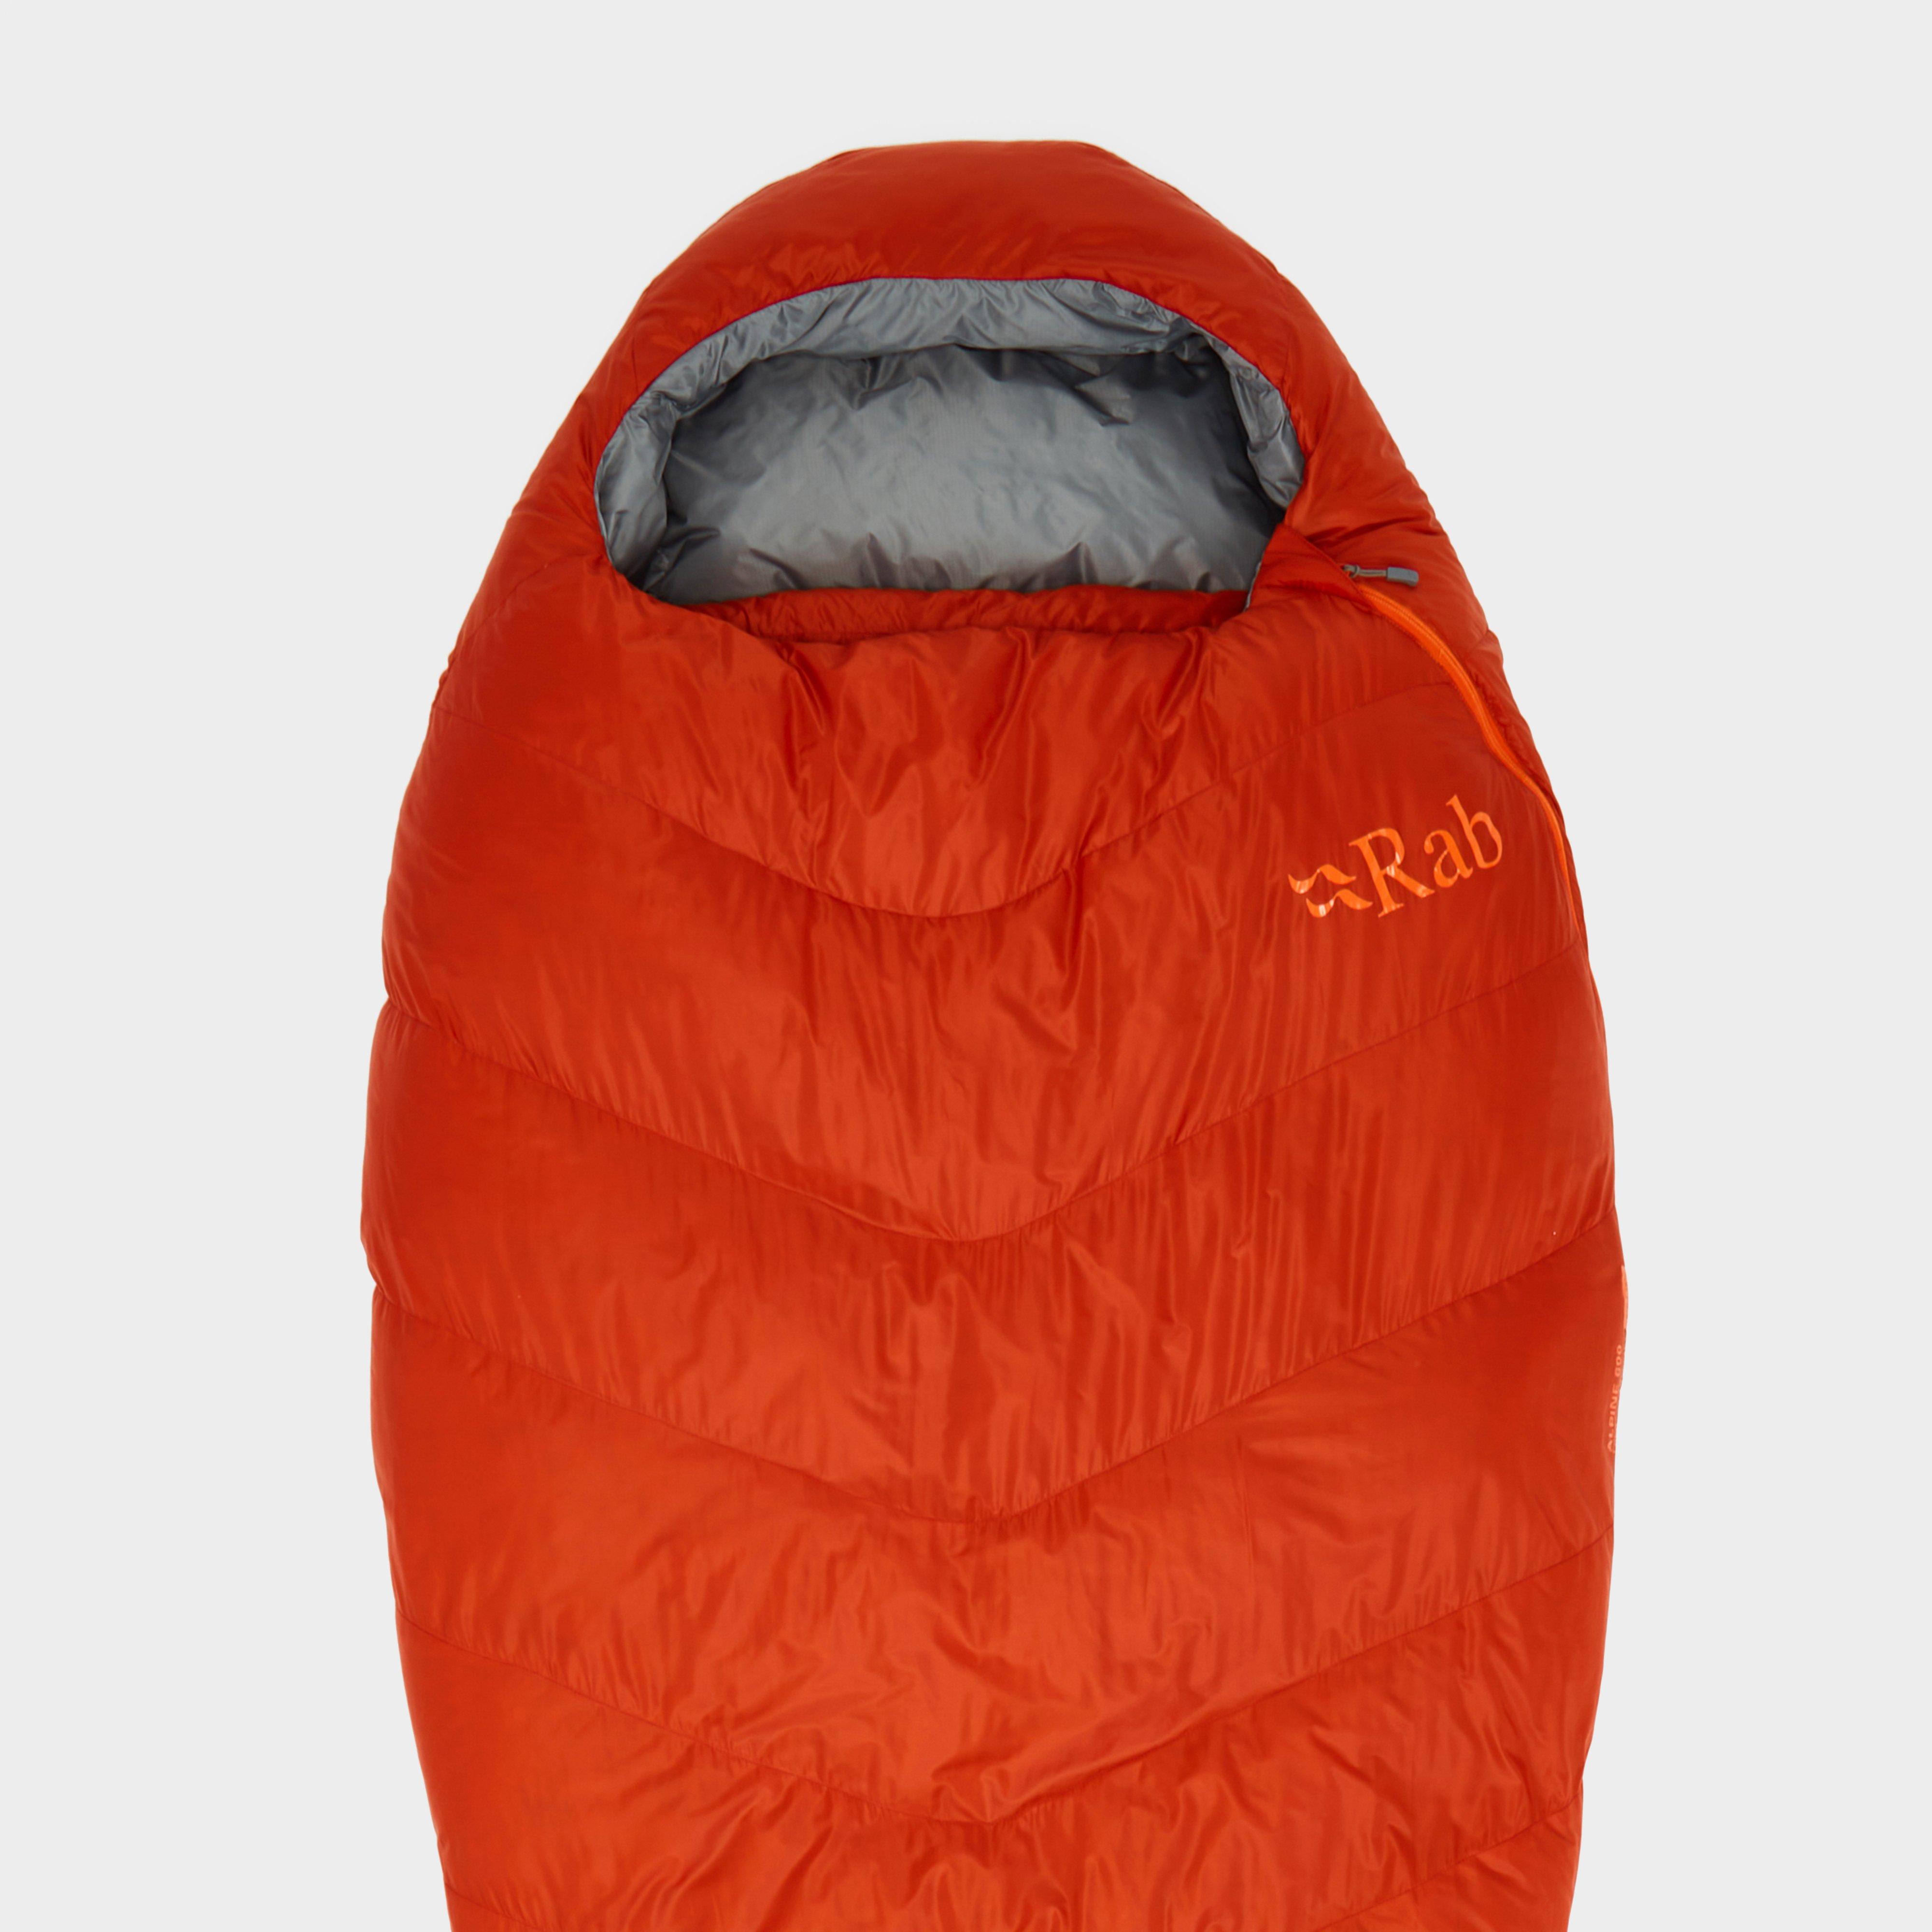  Rab Alpine 600 Down Sleeping Bag, Red